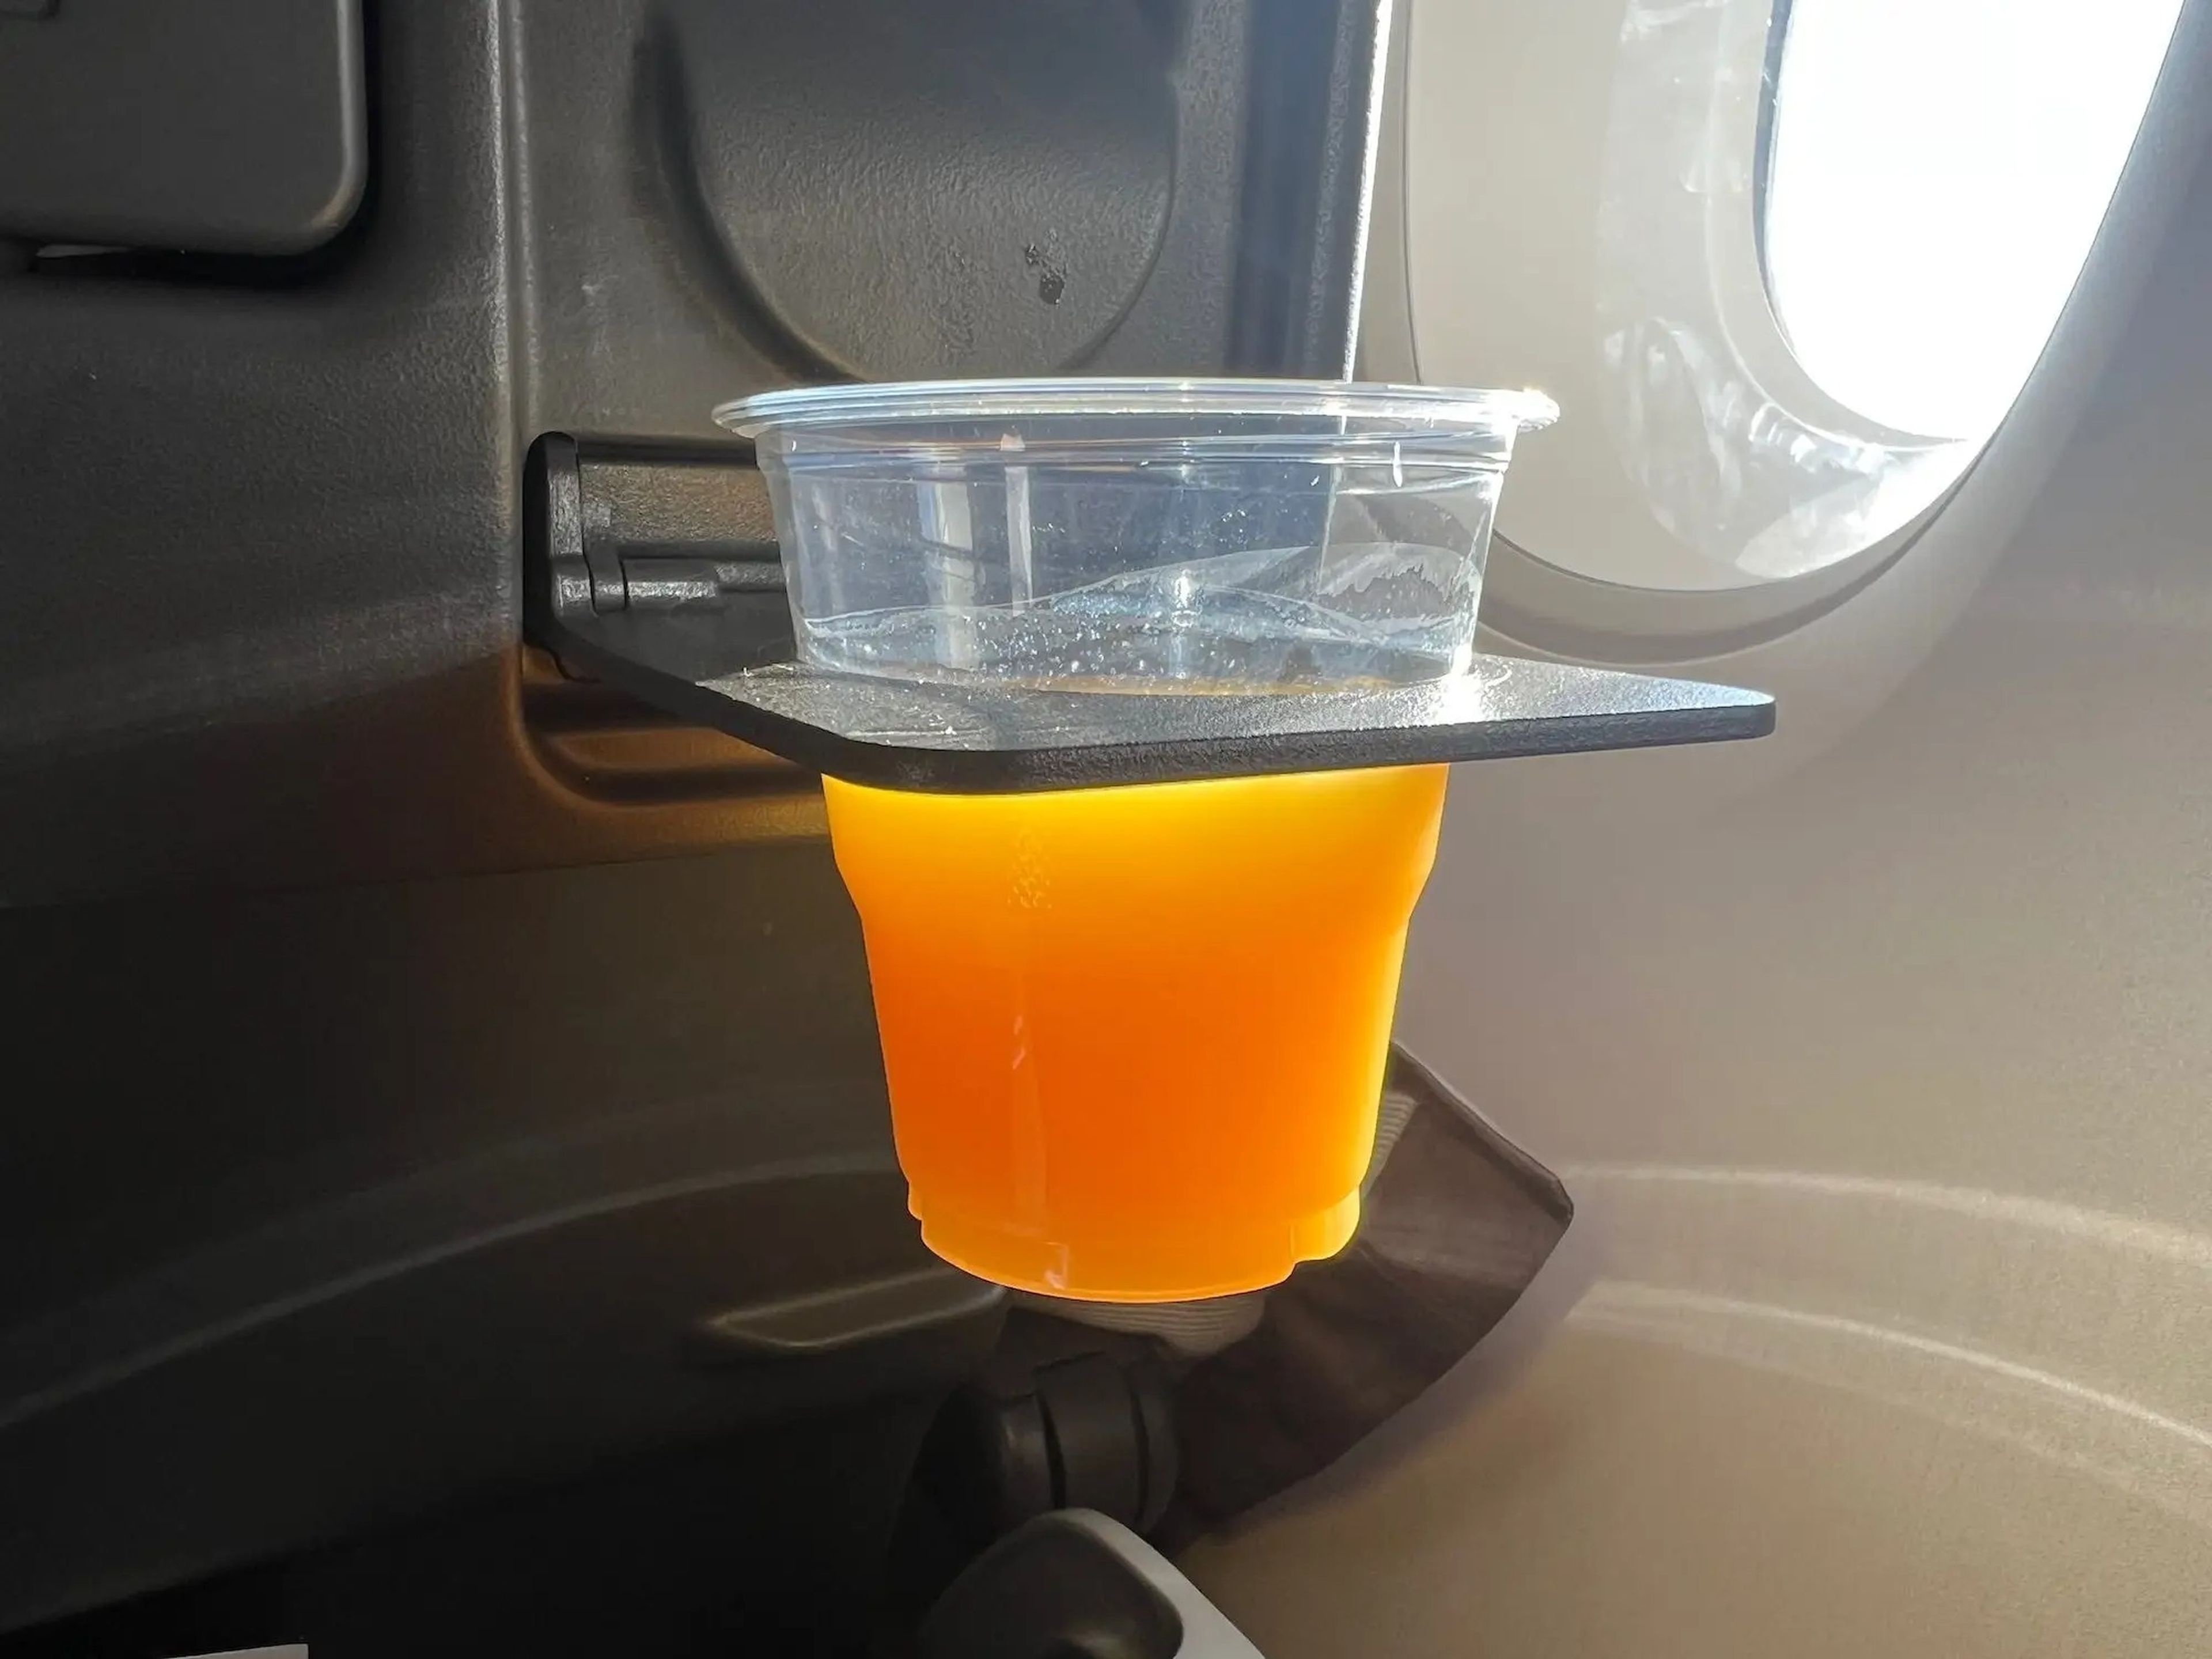 Orange juice in the cupholder.